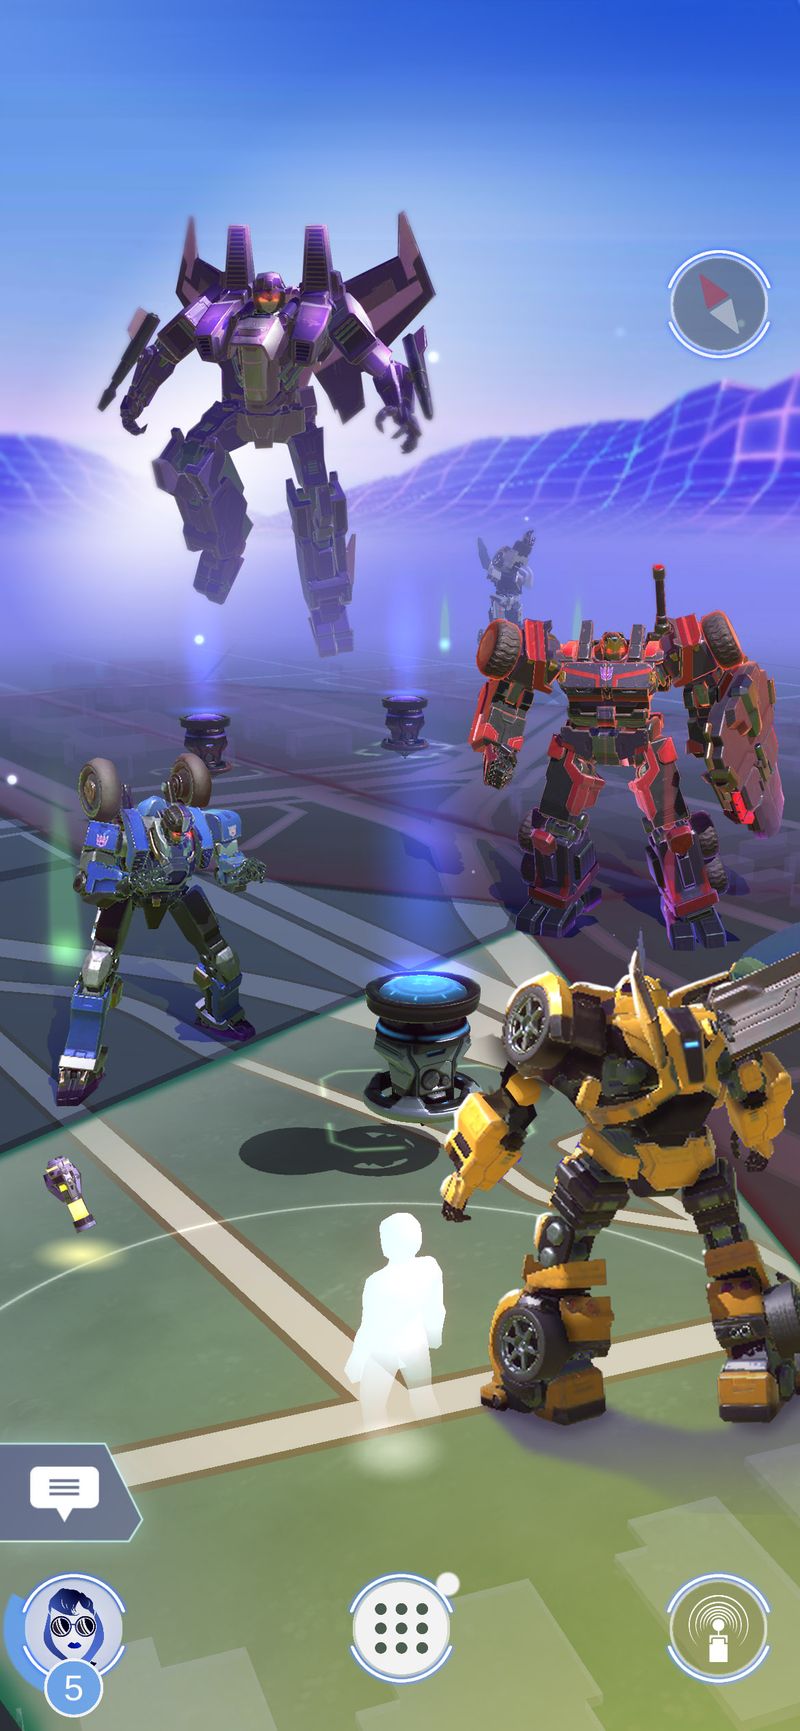 "Transformers: Heavy Metal" kombiniert reale und digitale Welt in einem Augmented Reality-Mobile Game.